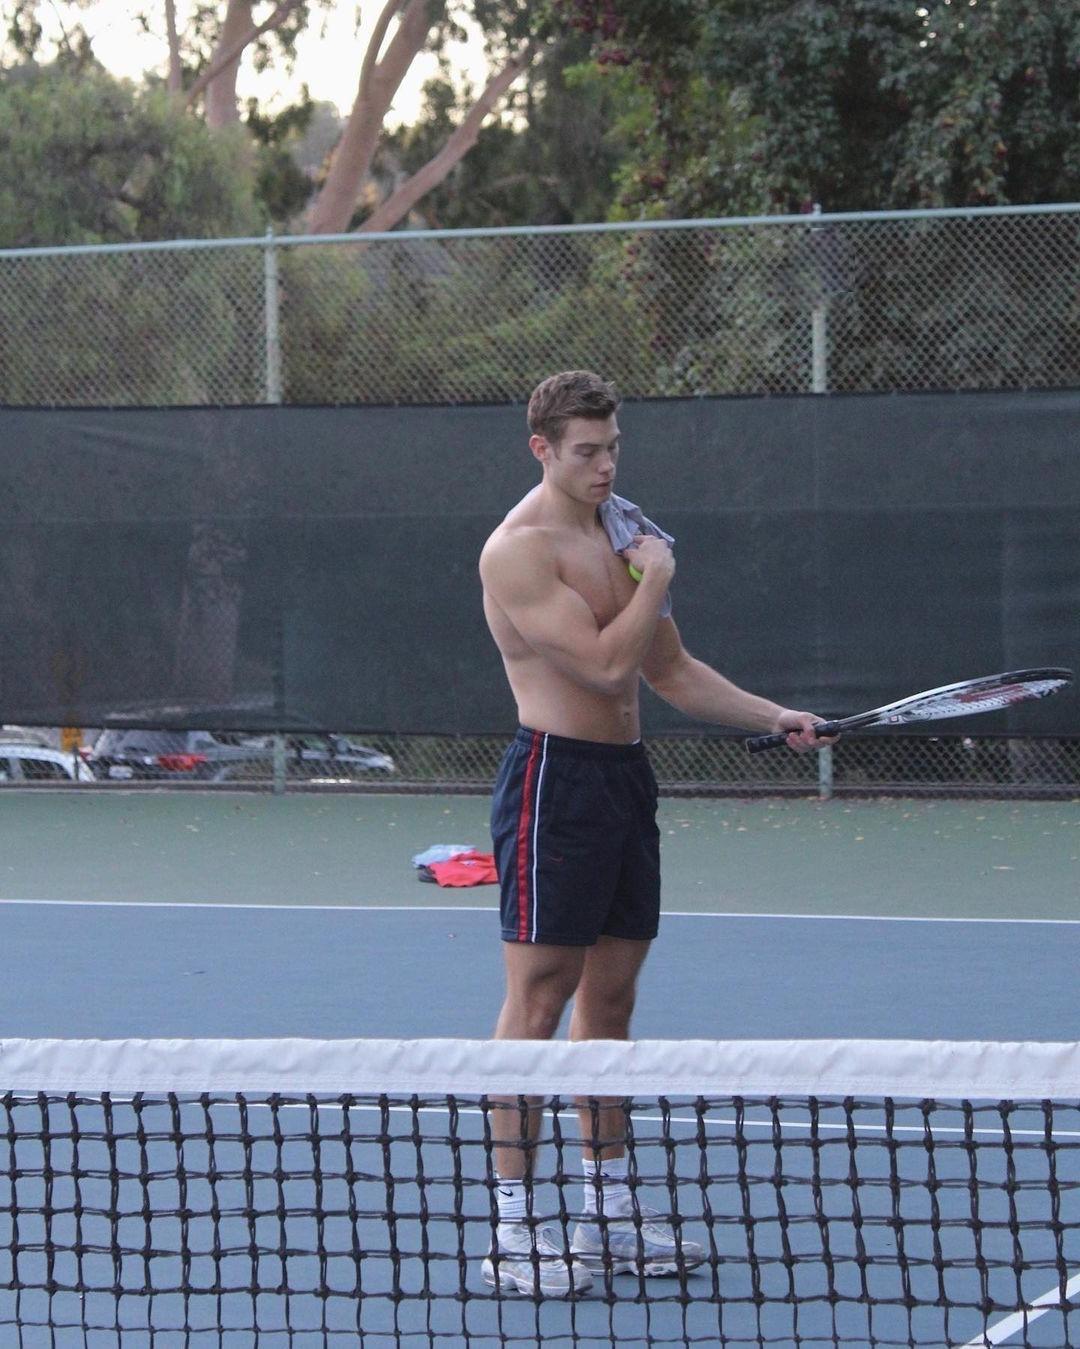 hot-american-tennis-players-derek-chadwick-shirtless-strong-body